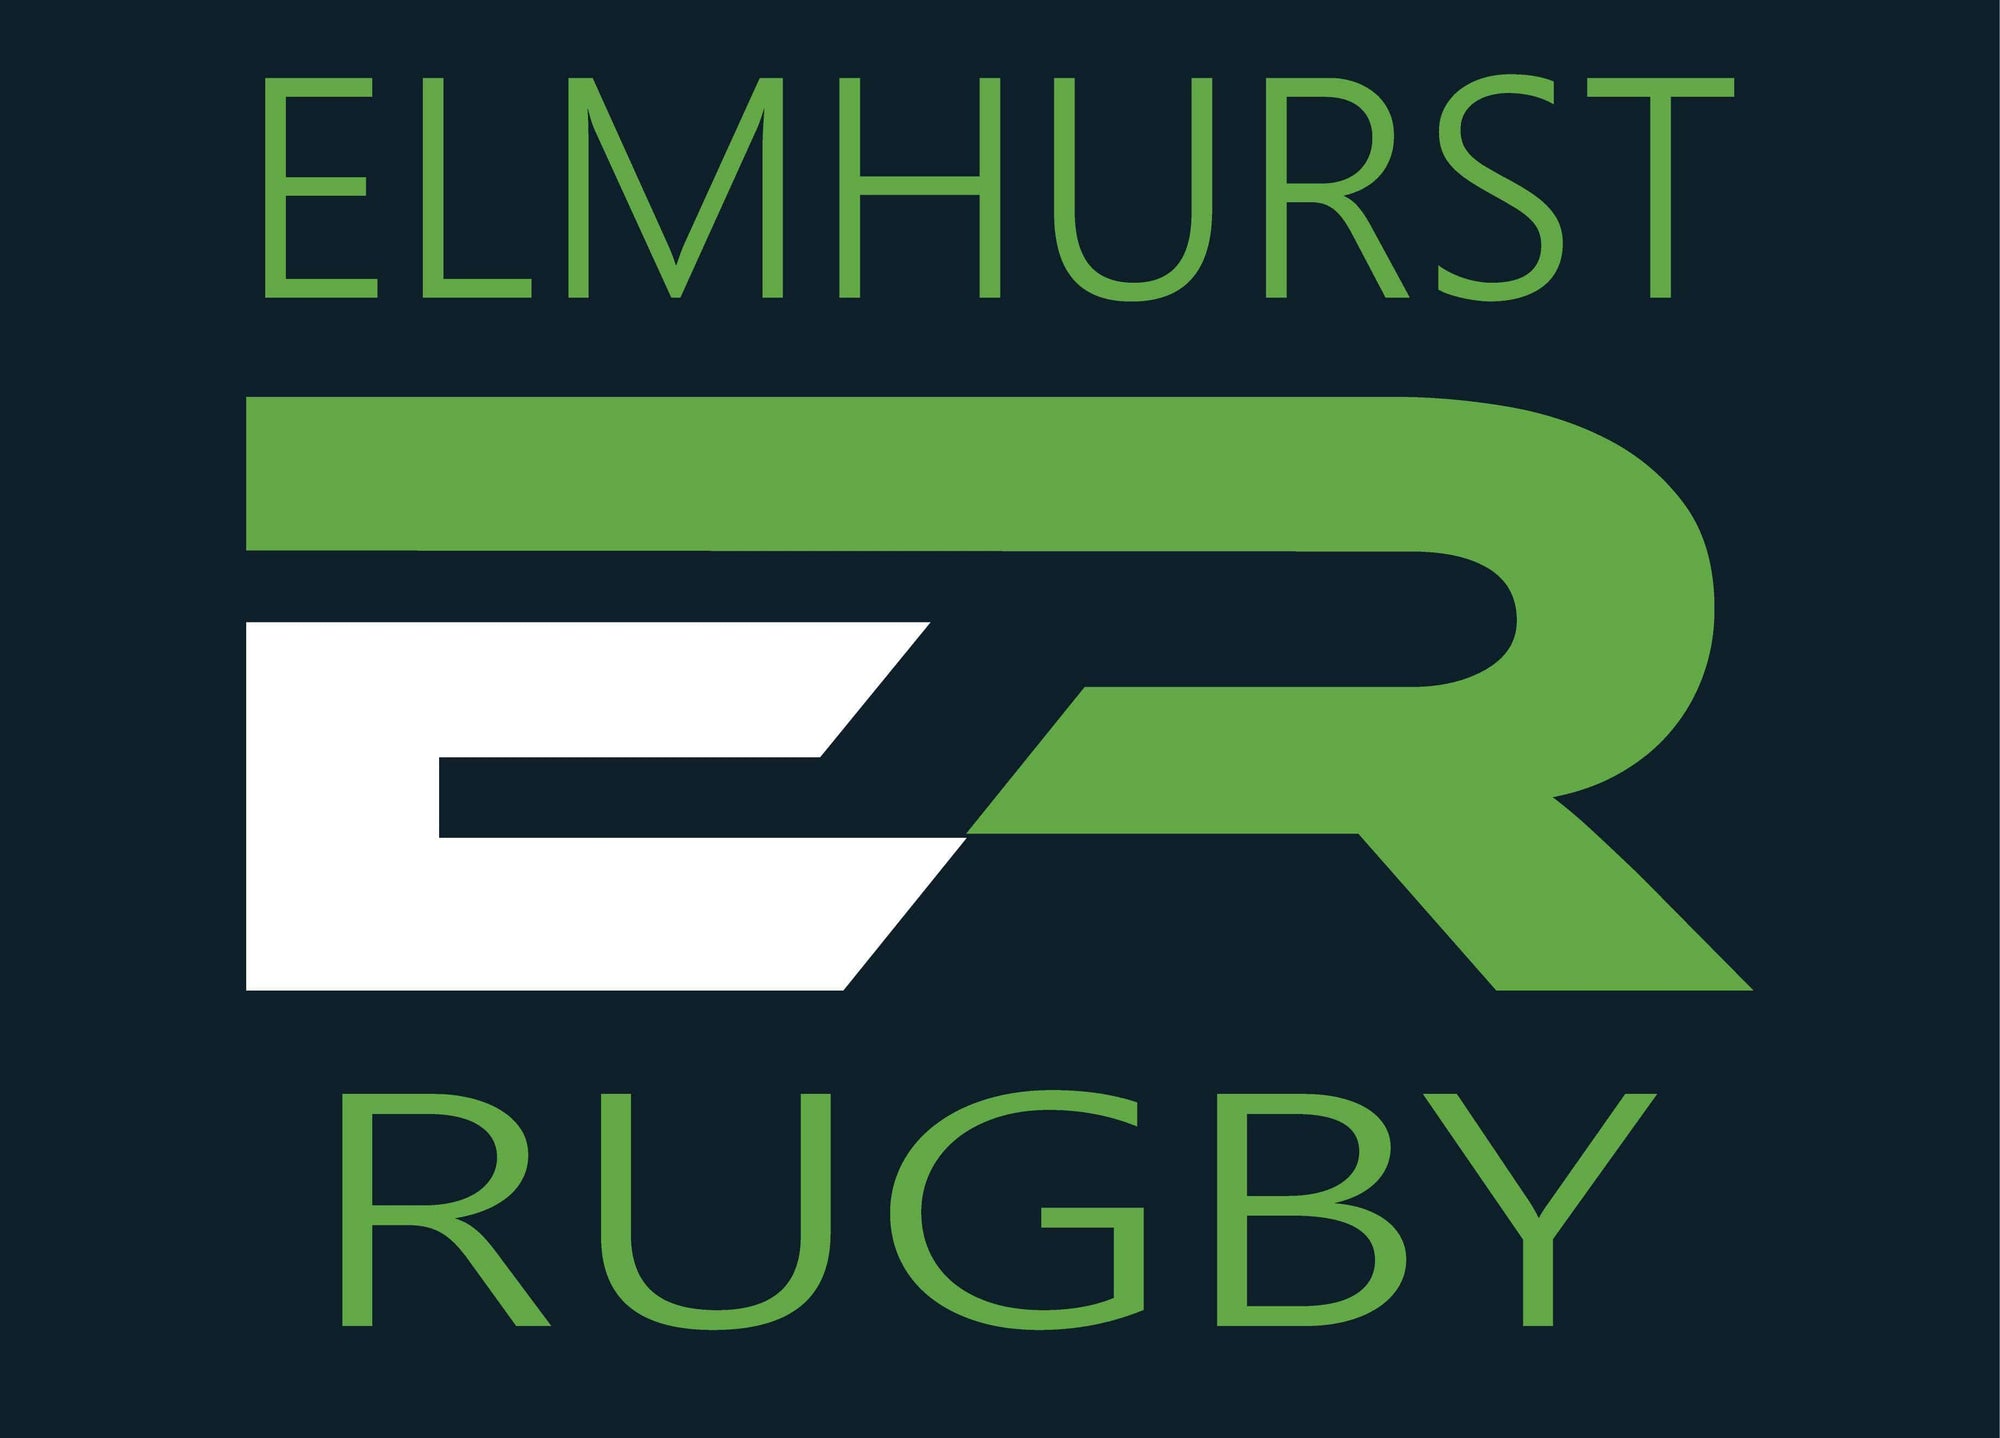 Elmhurst Rugby